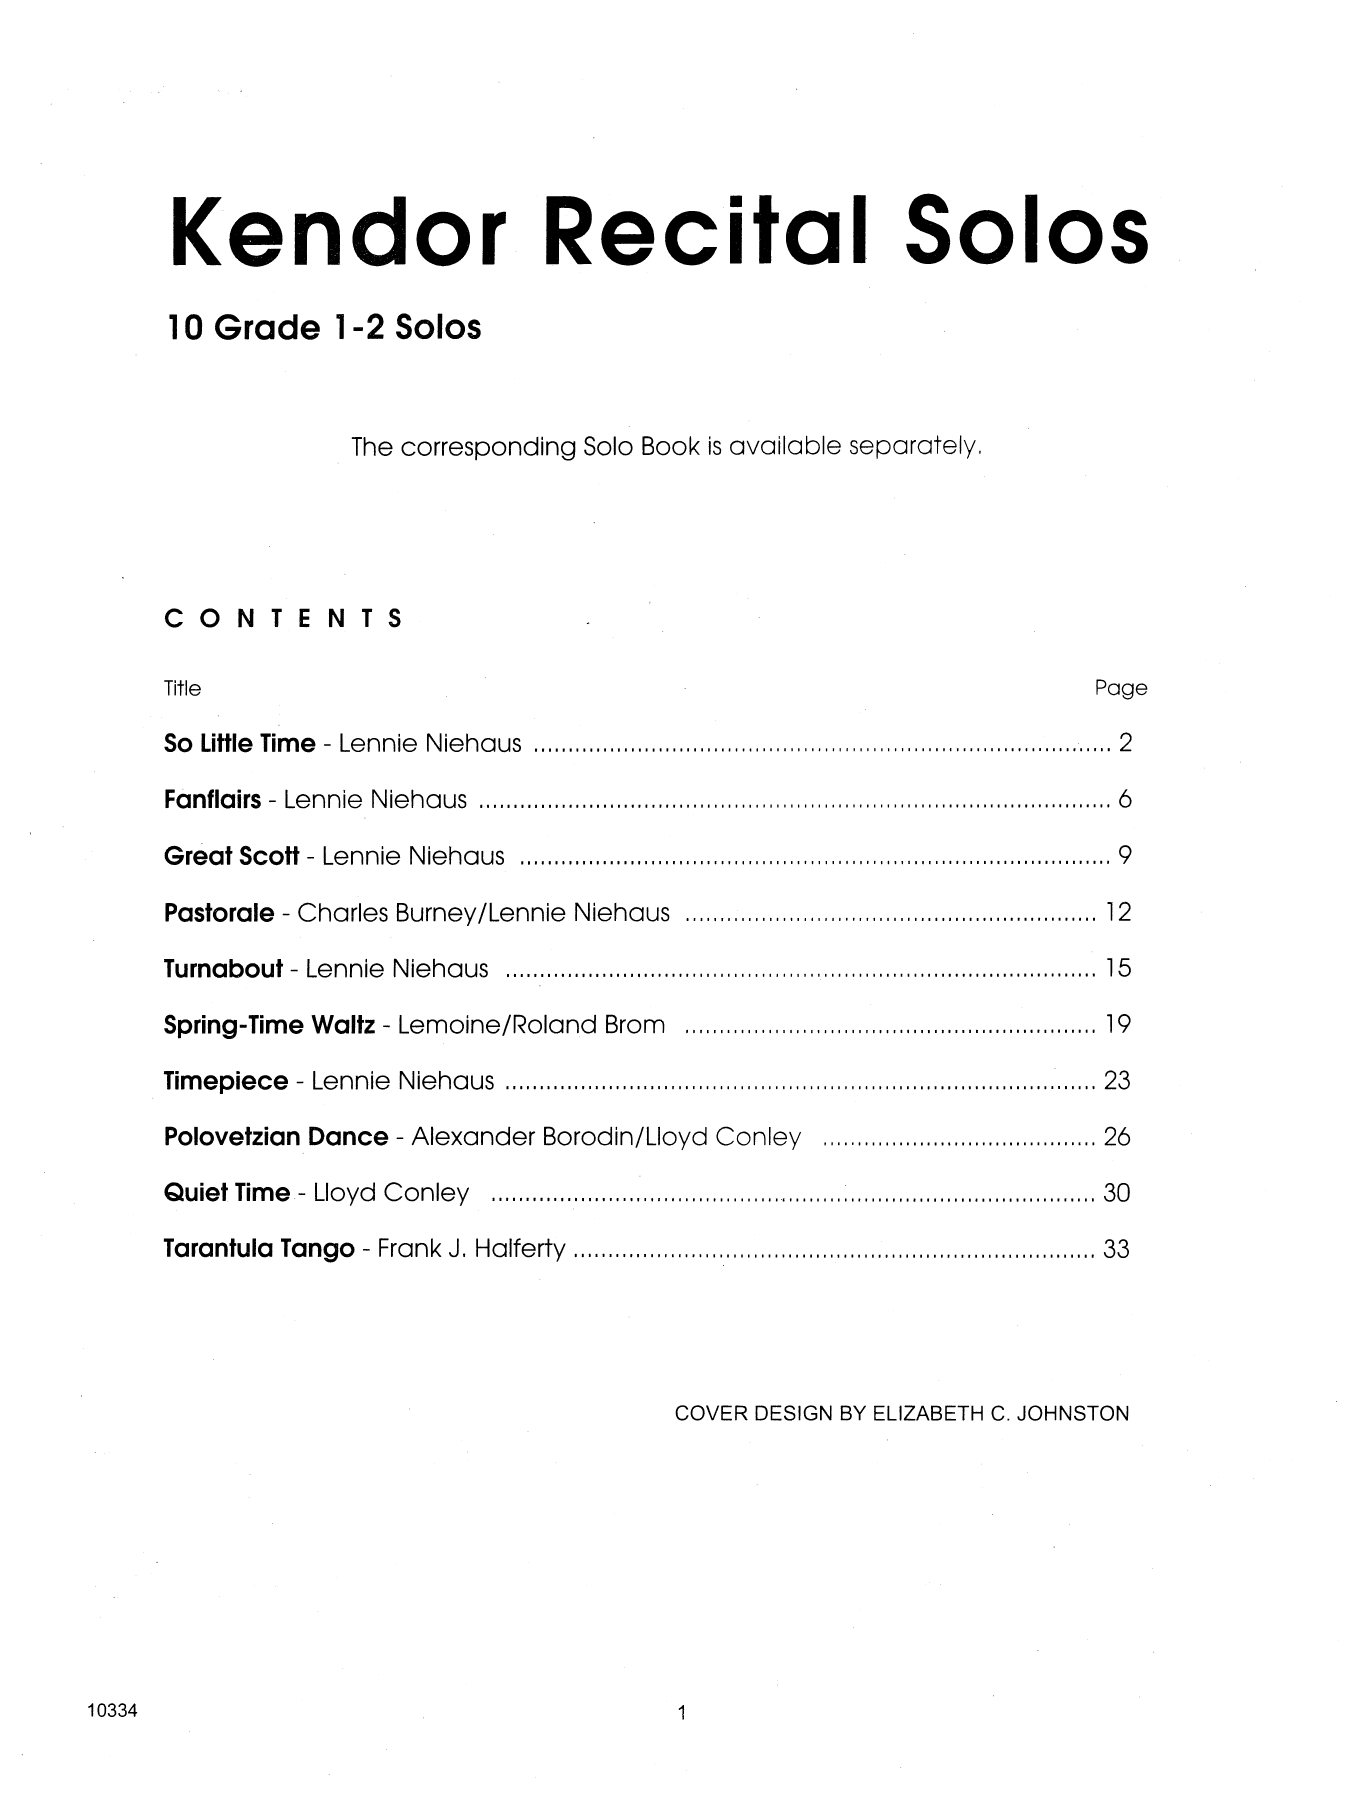 Download Various Kendor Recital Solos - Clarinet (Piano Sheet Music